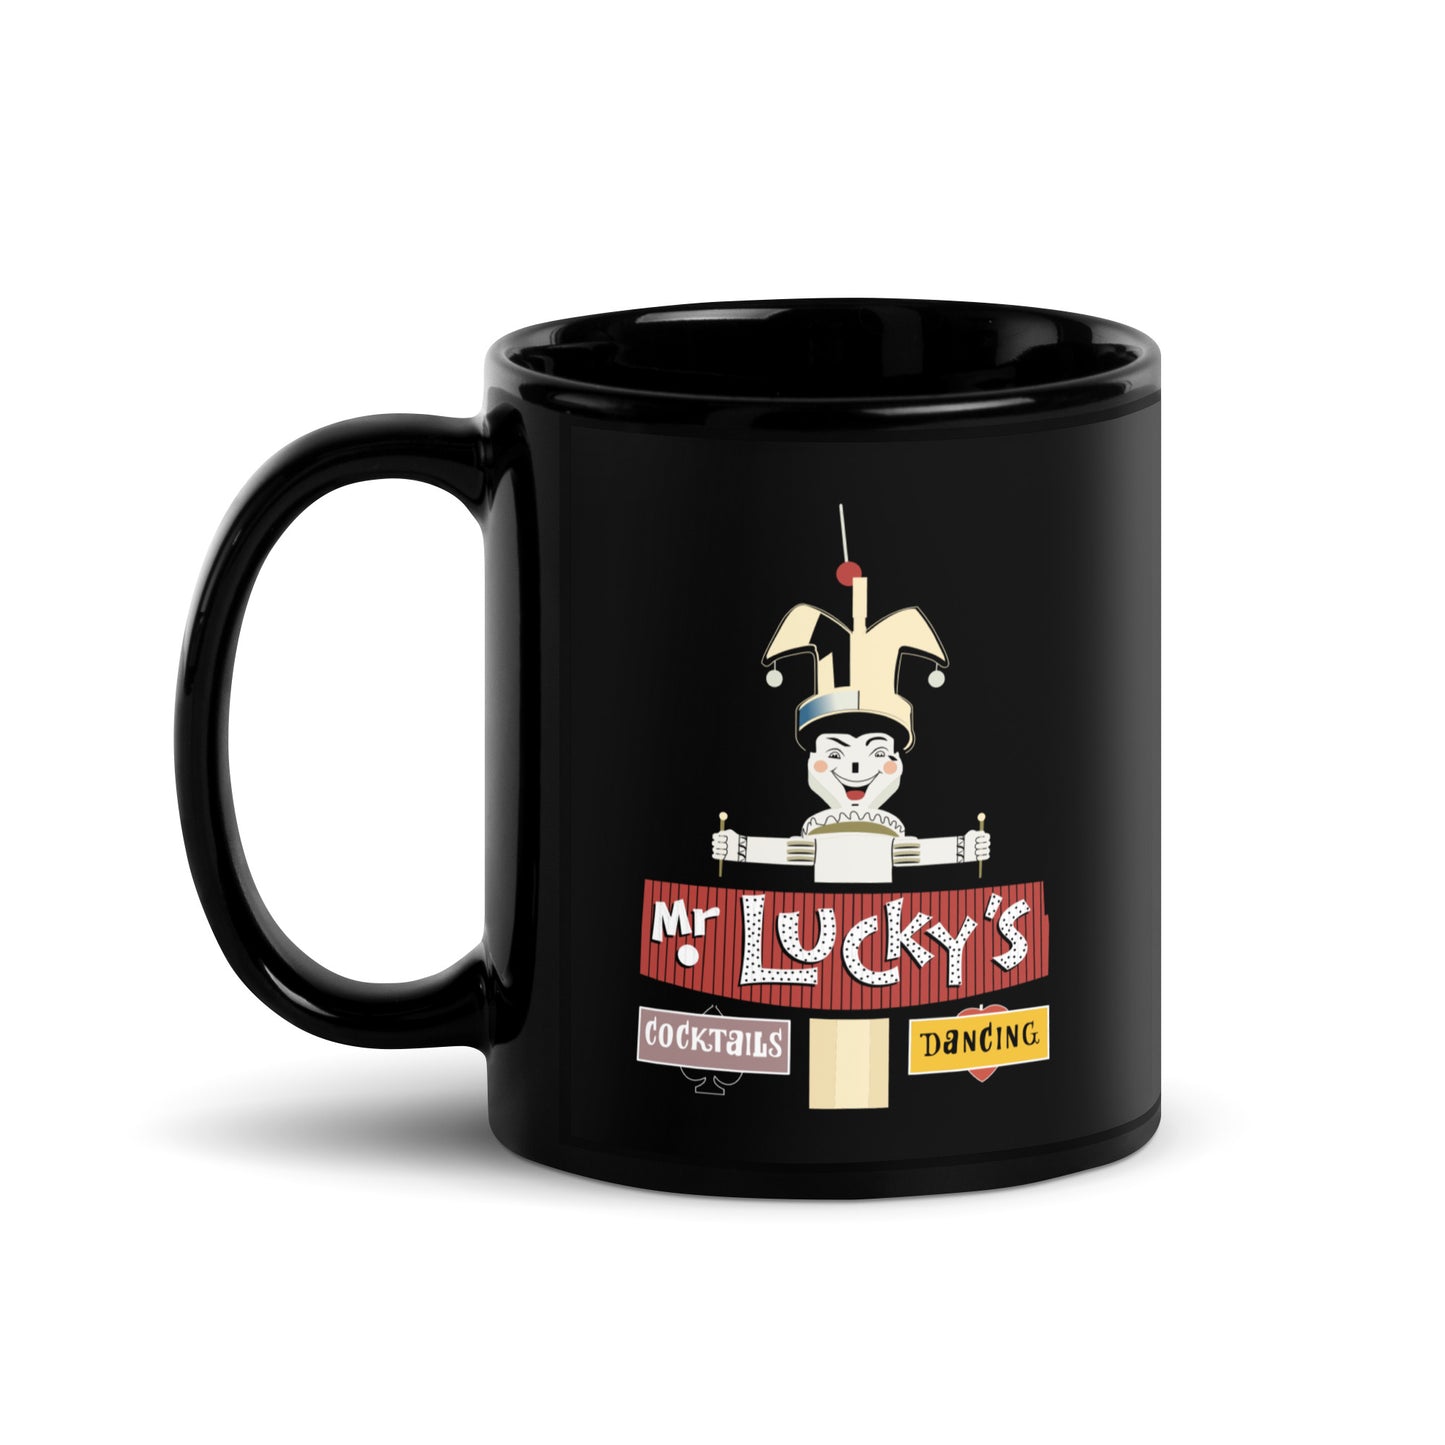 Mr. Lucky's Coffee Mug